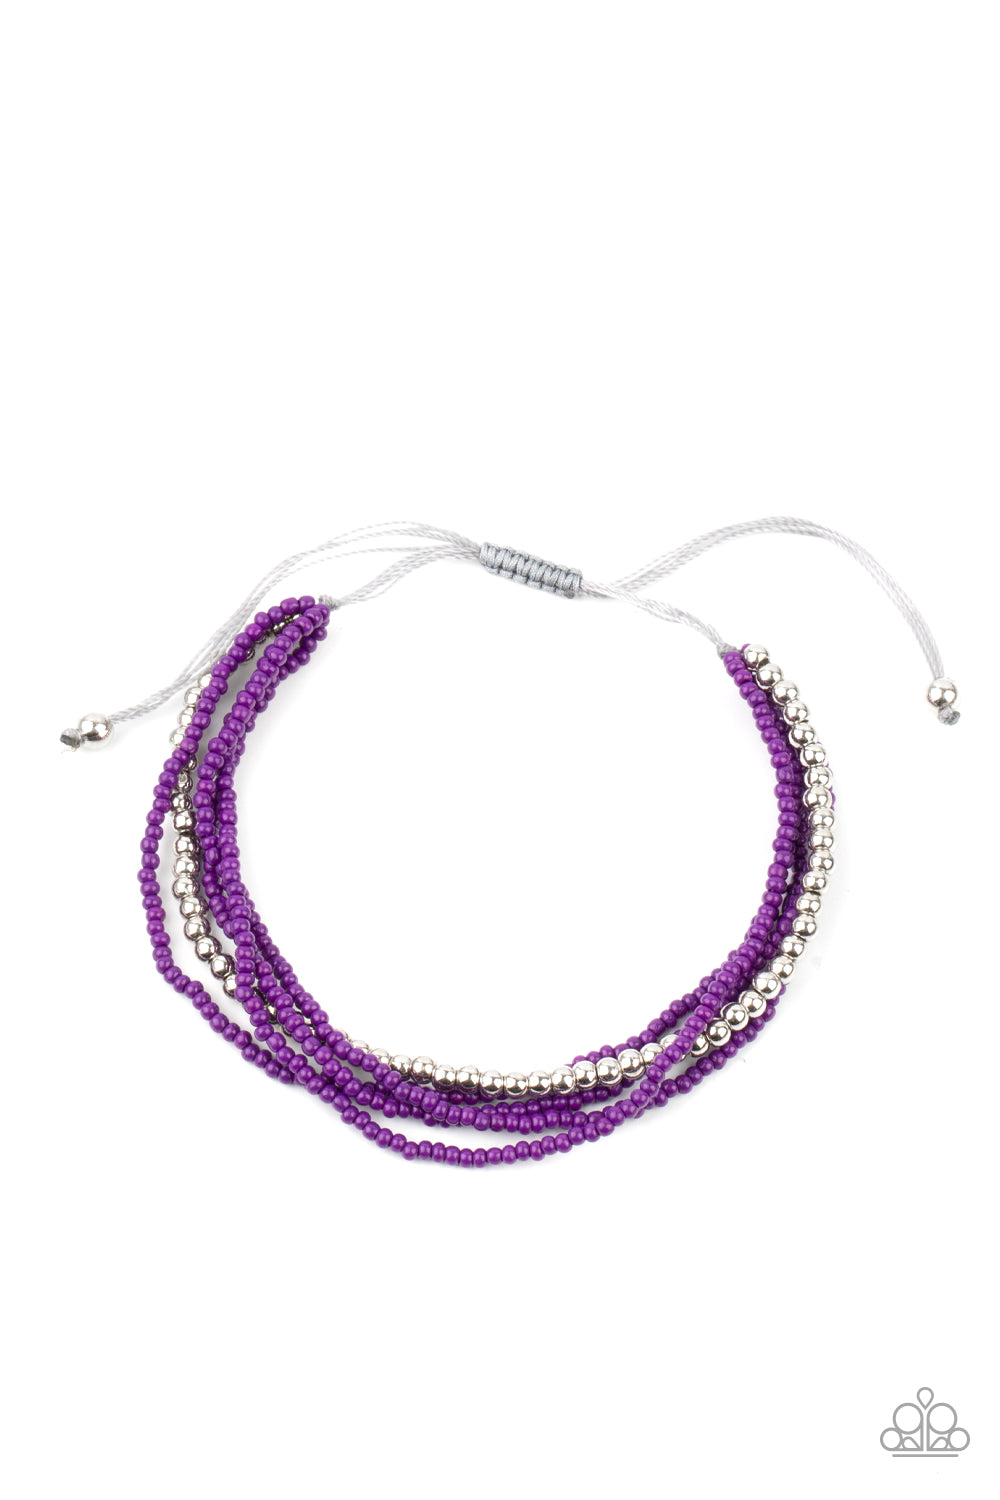 Paparazzi - All Beaded Up - Purple Seed Bead Bracelet - Alies Bling Bar